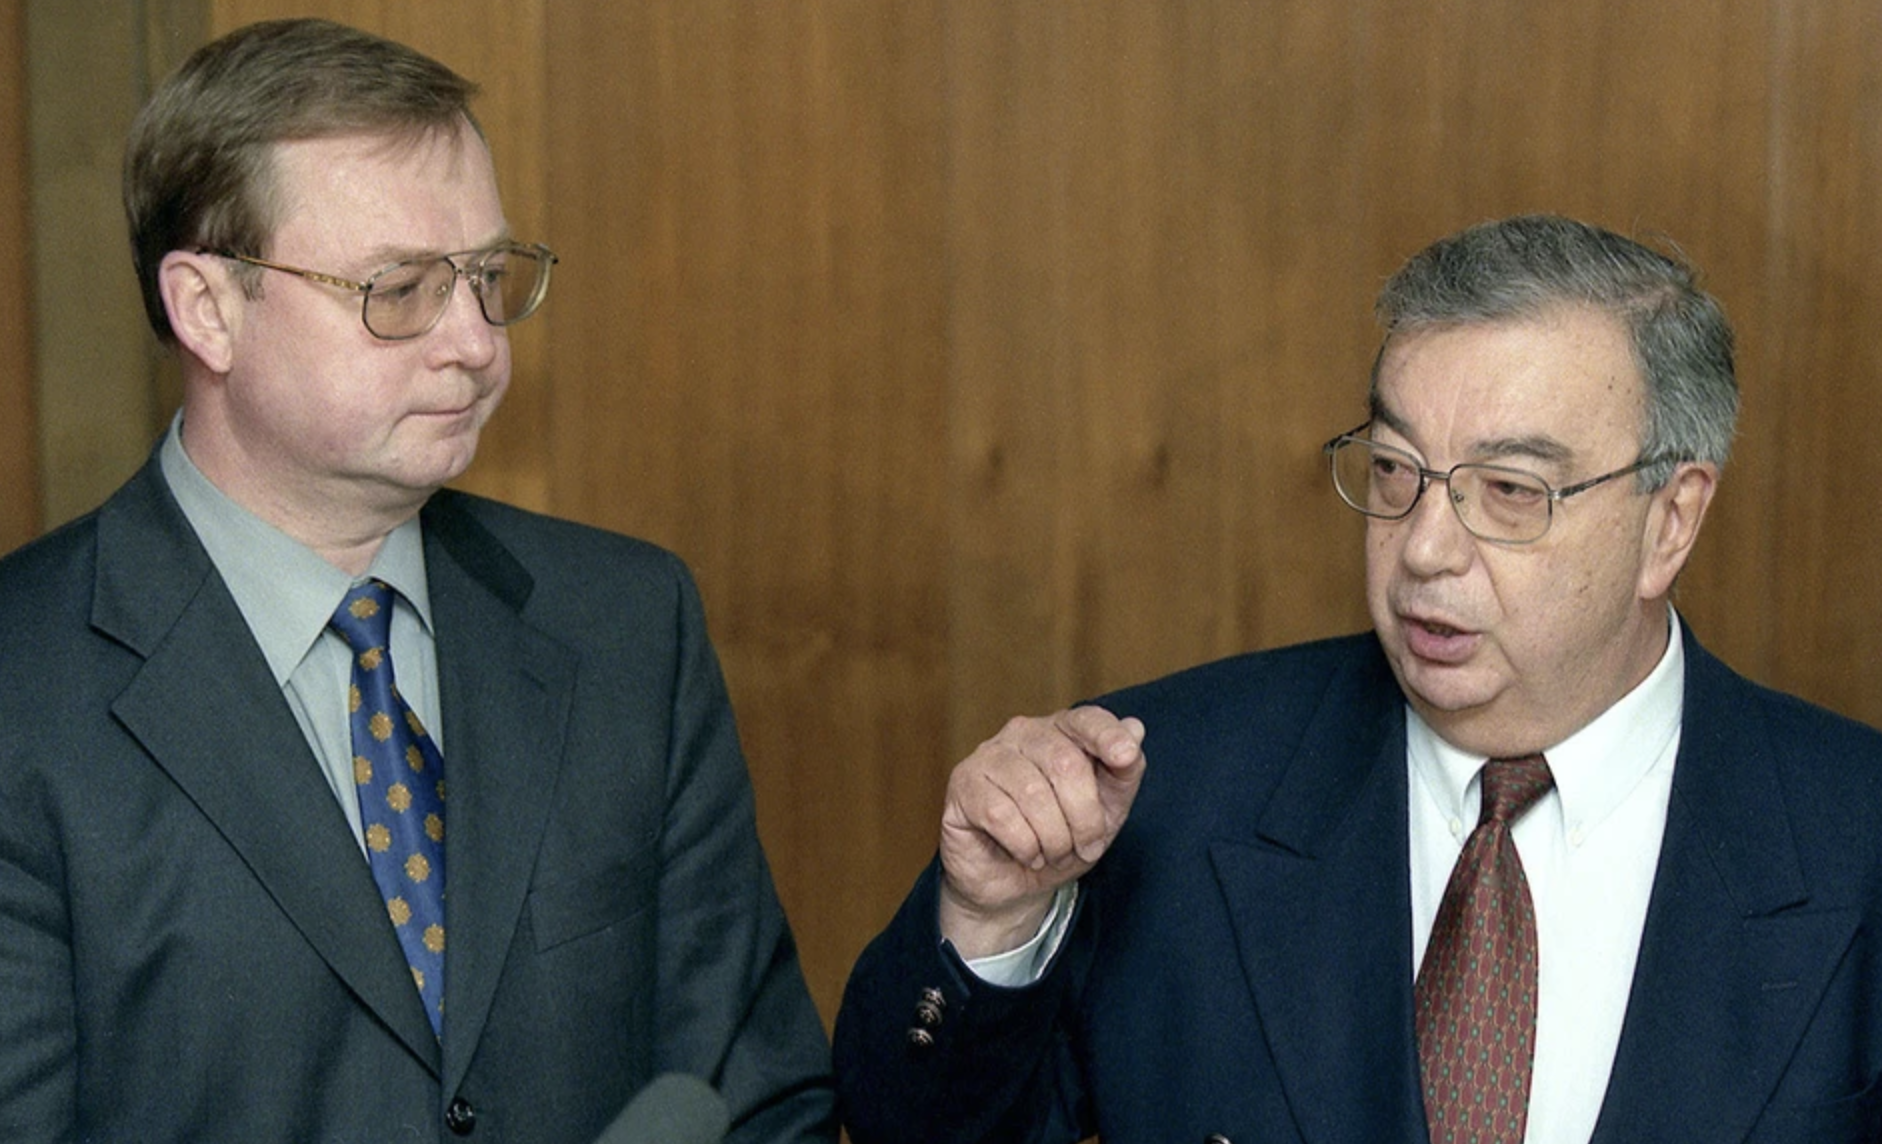 Степашин премьер министр. Премьер министр Степашин в 1999 году. Кириенко Примаков Степашин.